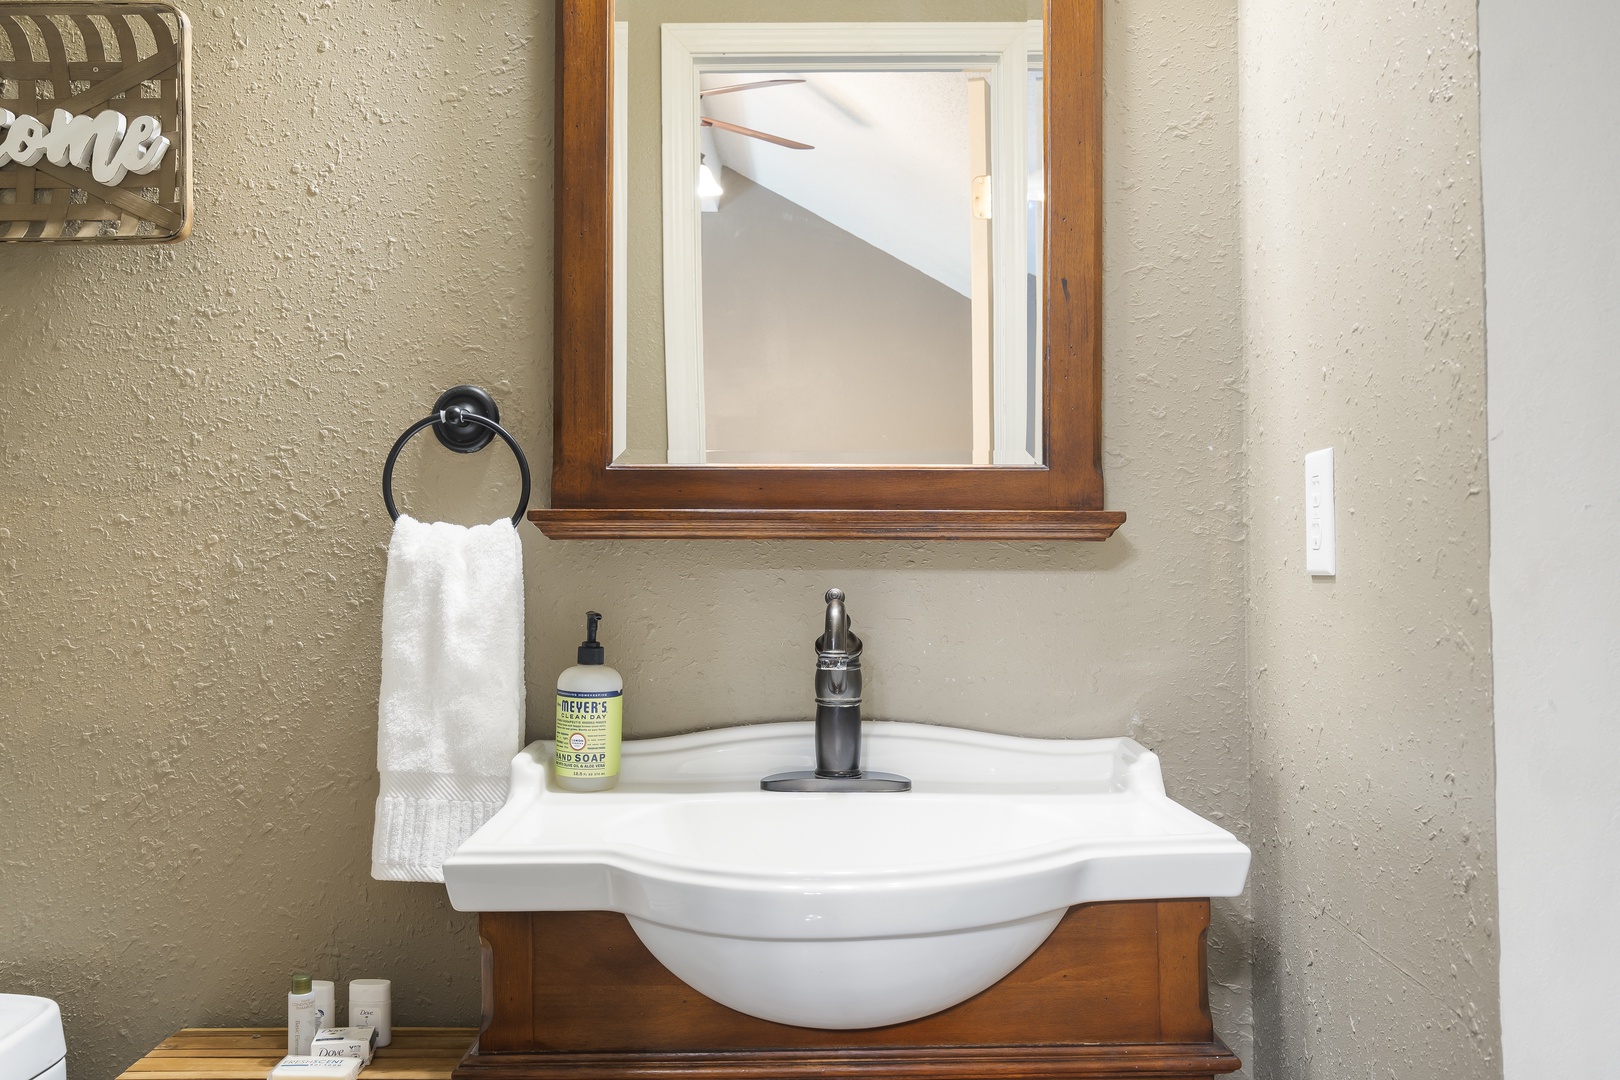 The loft bedroom ensuite offers a single vanity & shower